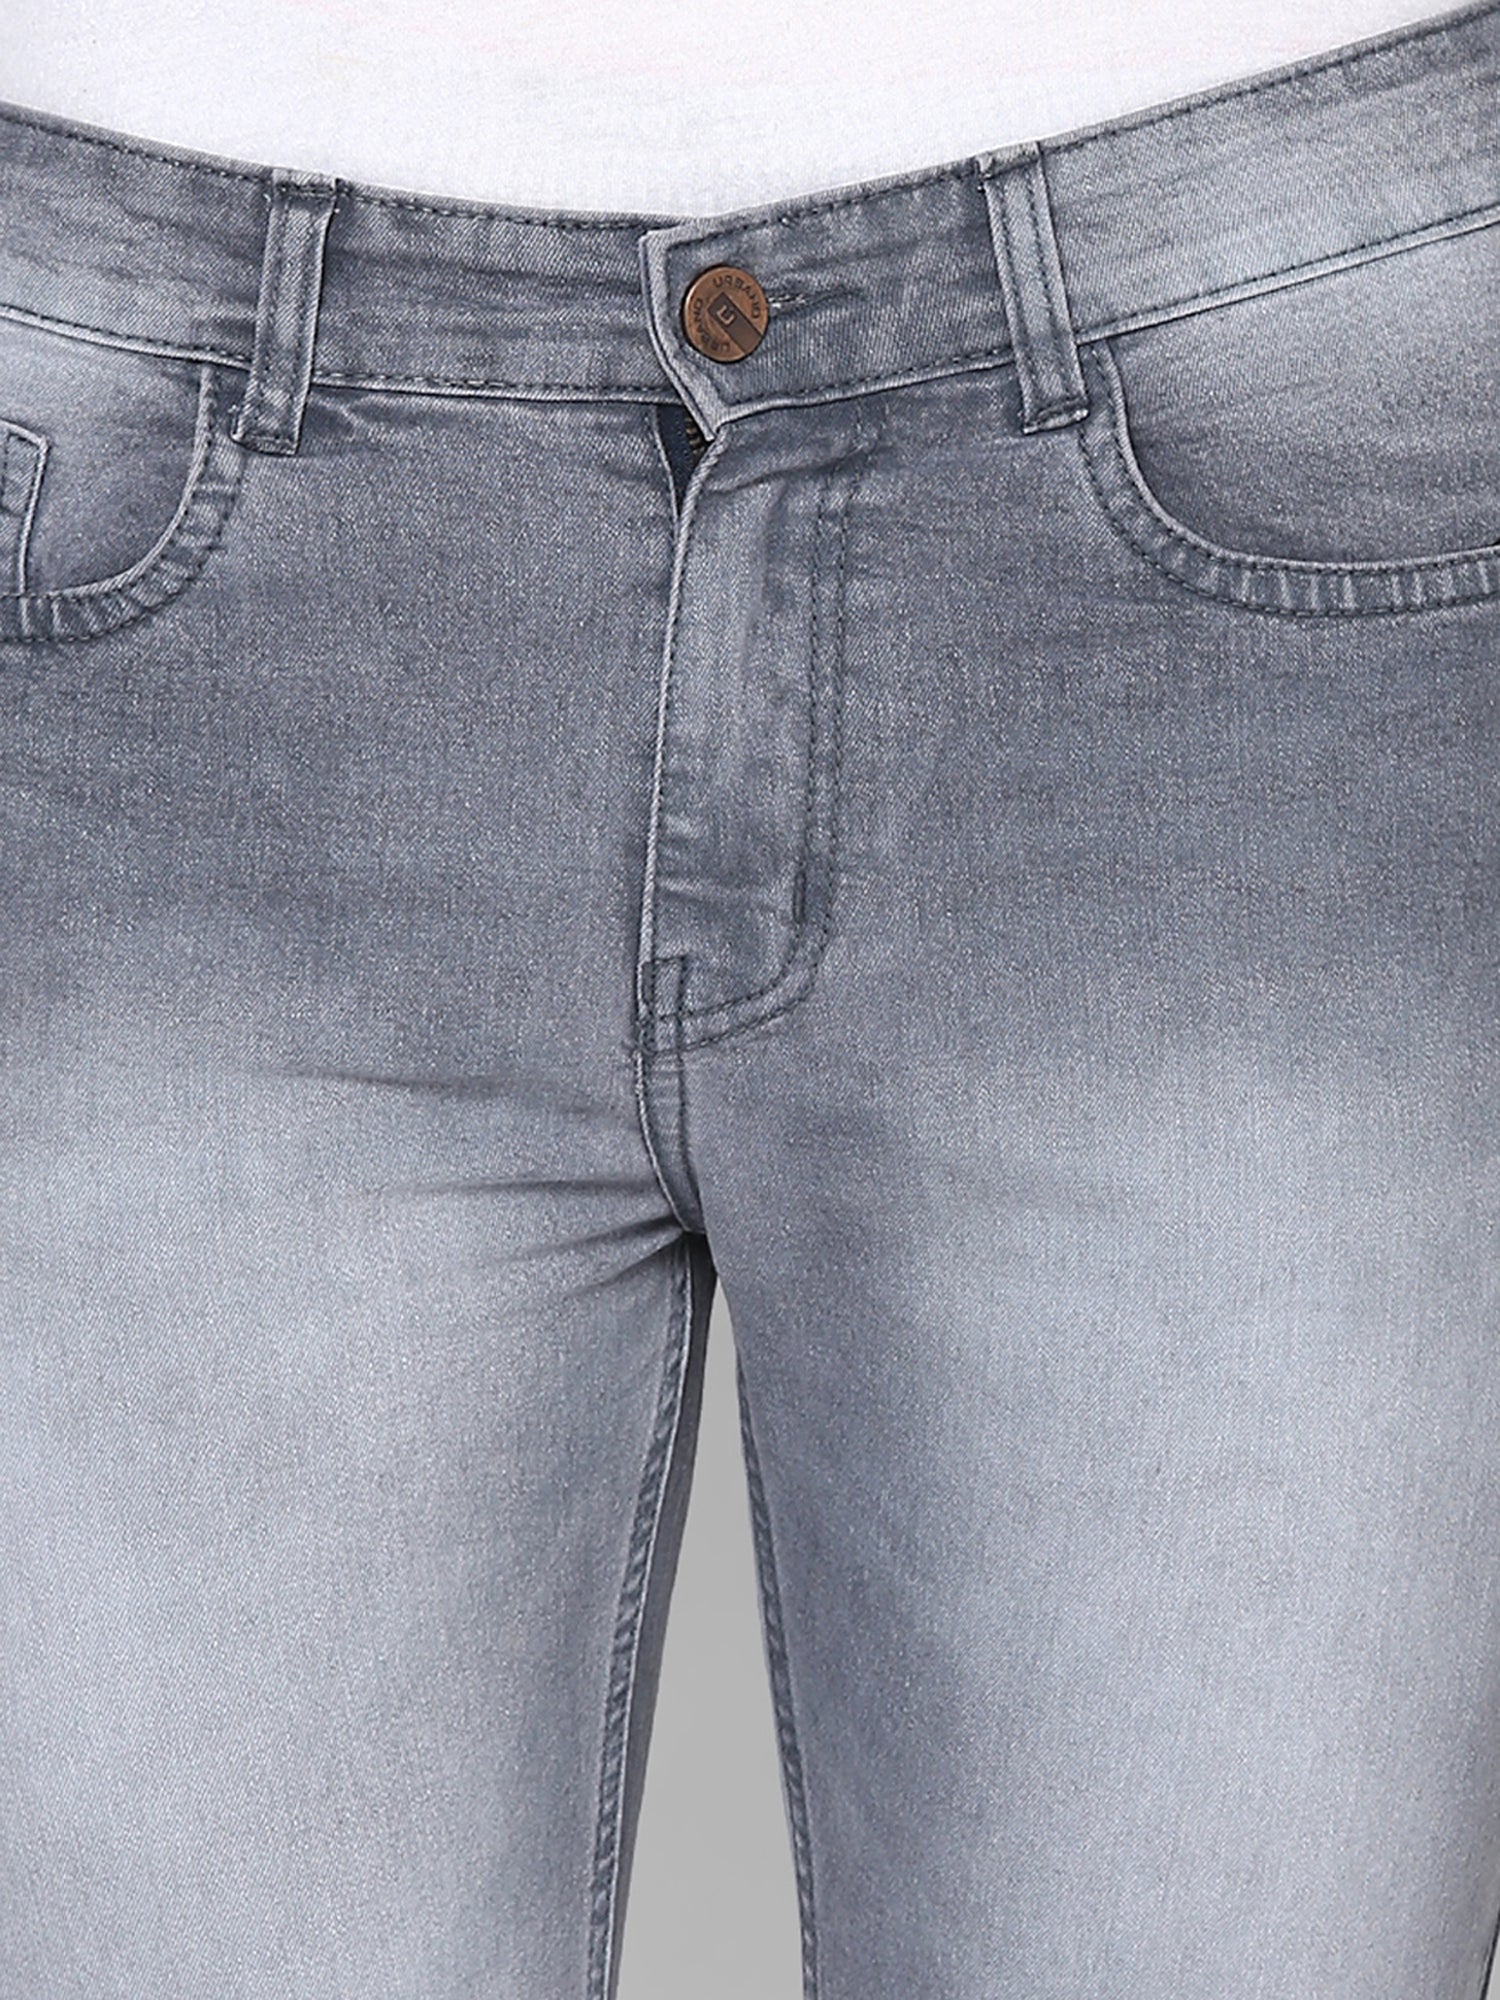 Men's Grey Slim Fit Jeans Stretchable